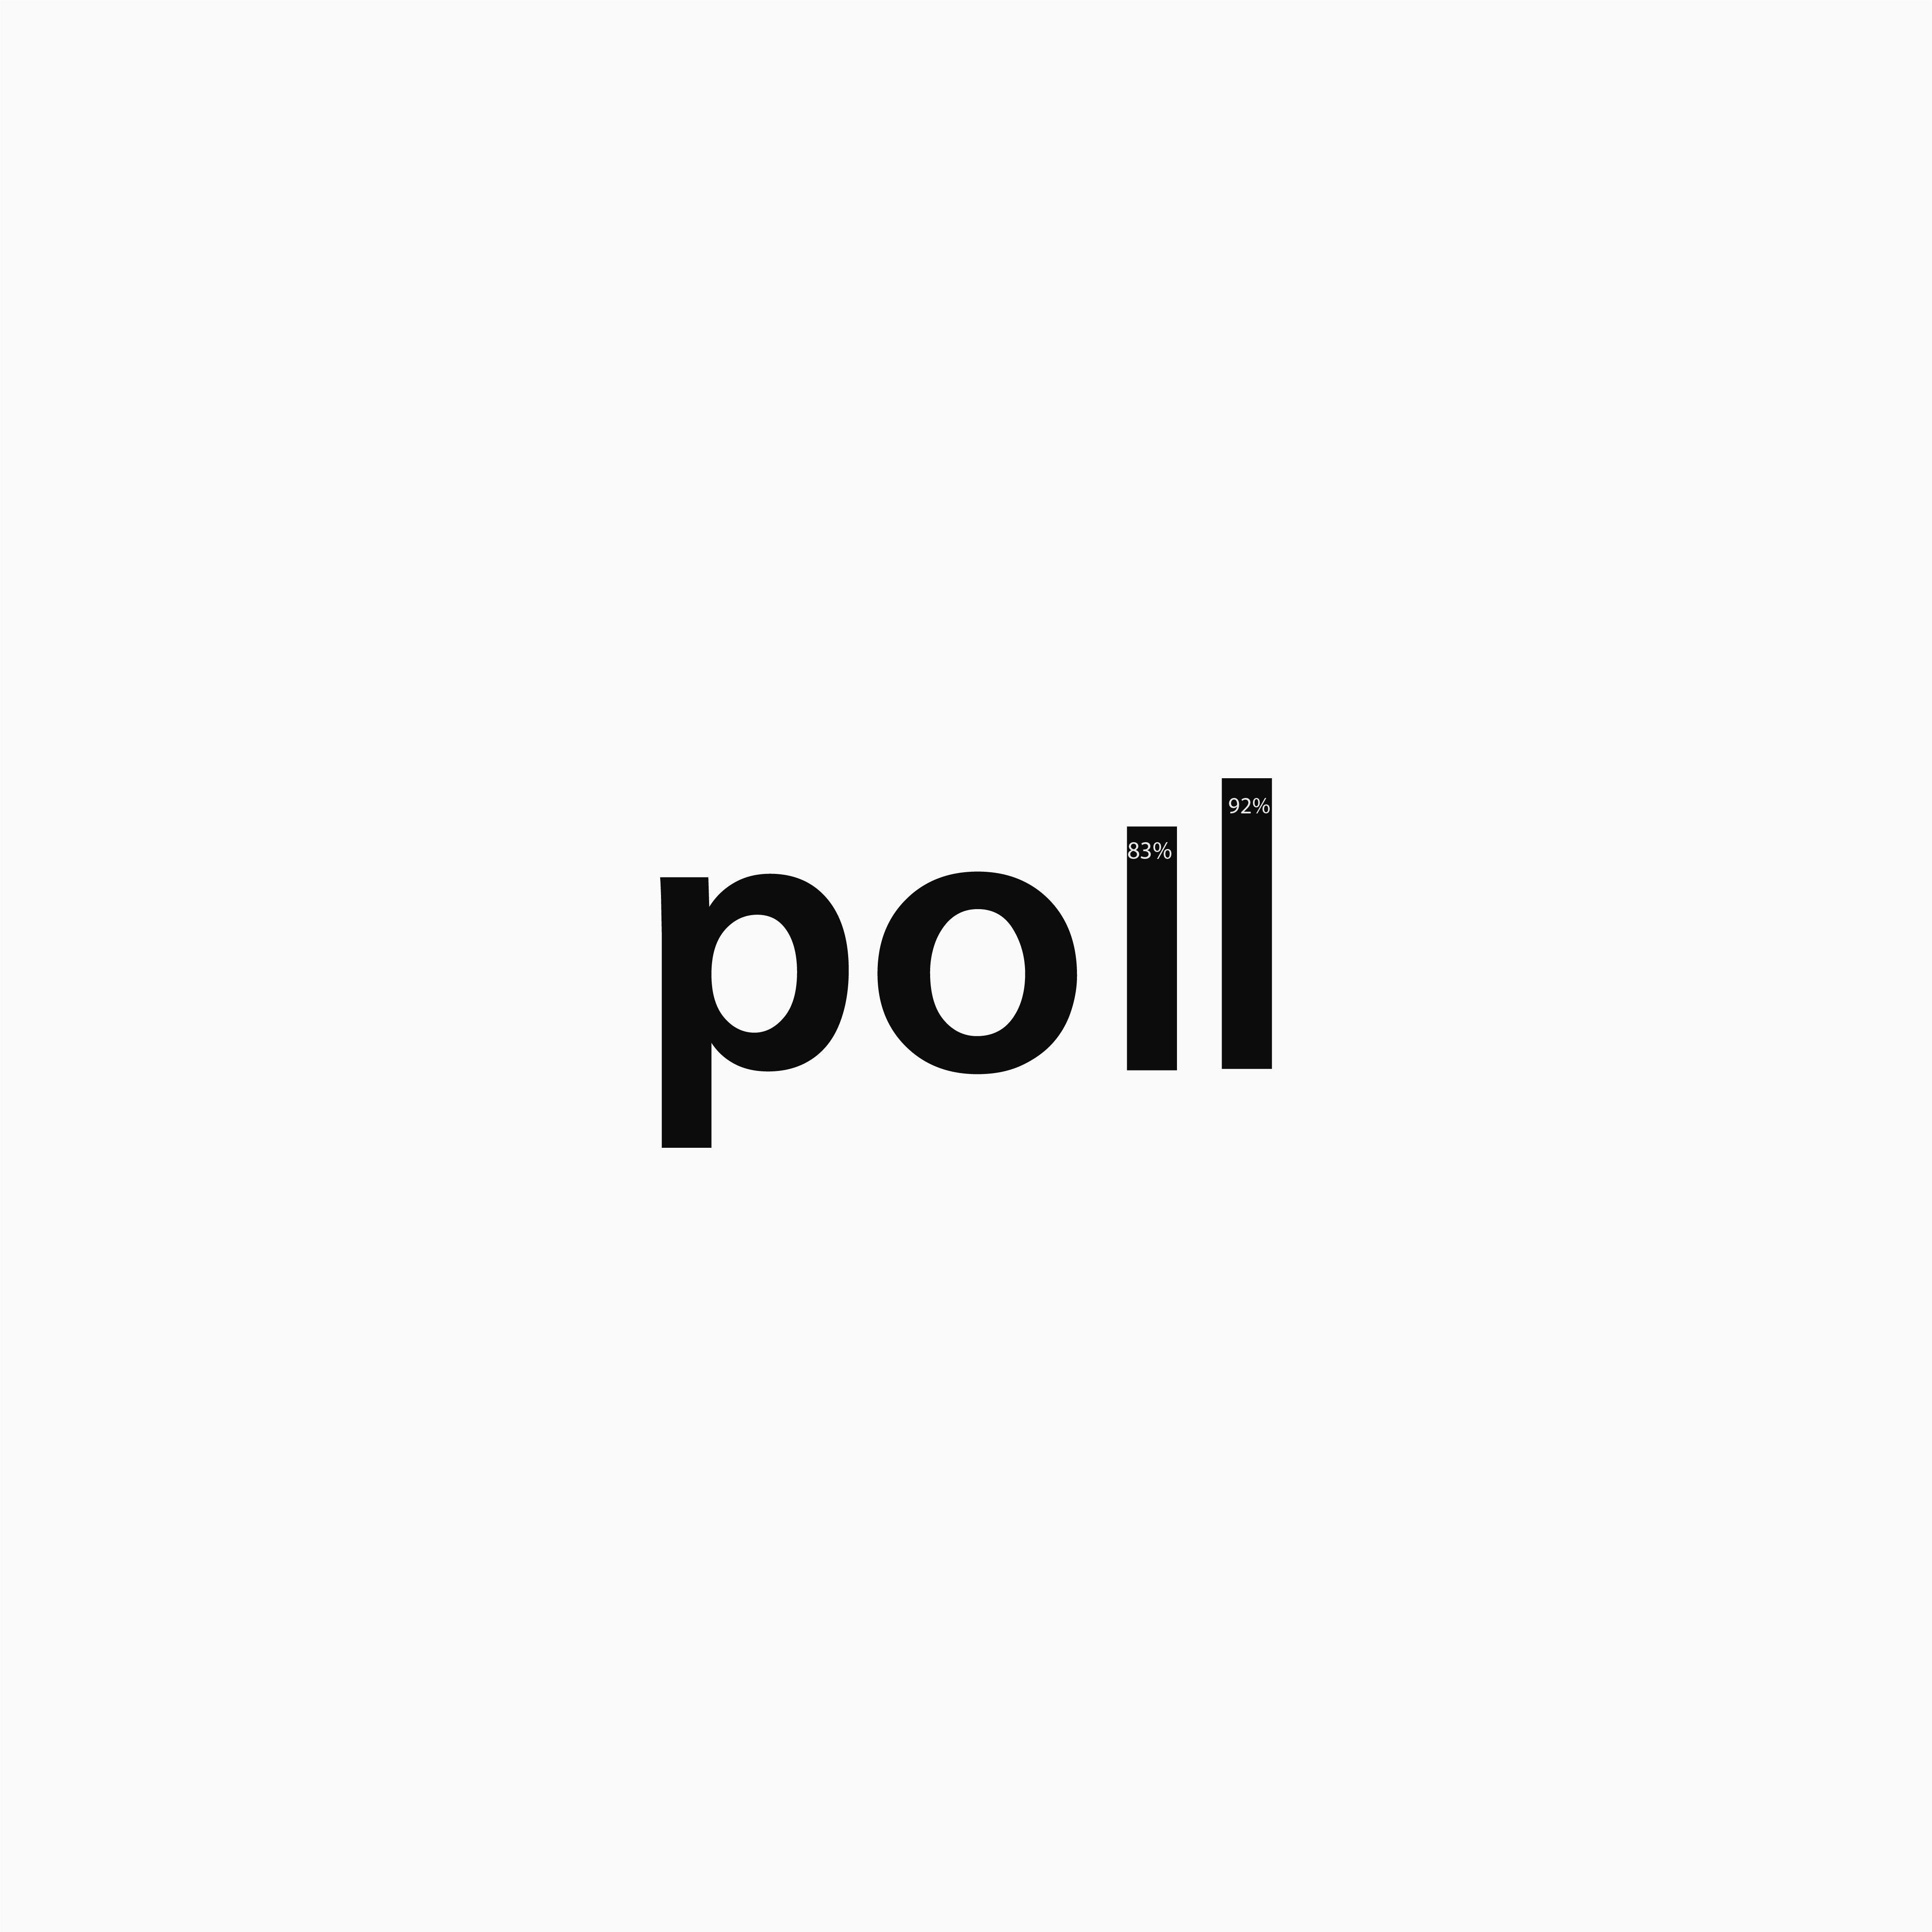 Poll Logo - POLL 15 100. Creative & Minimalistic Logo Designs. Logos